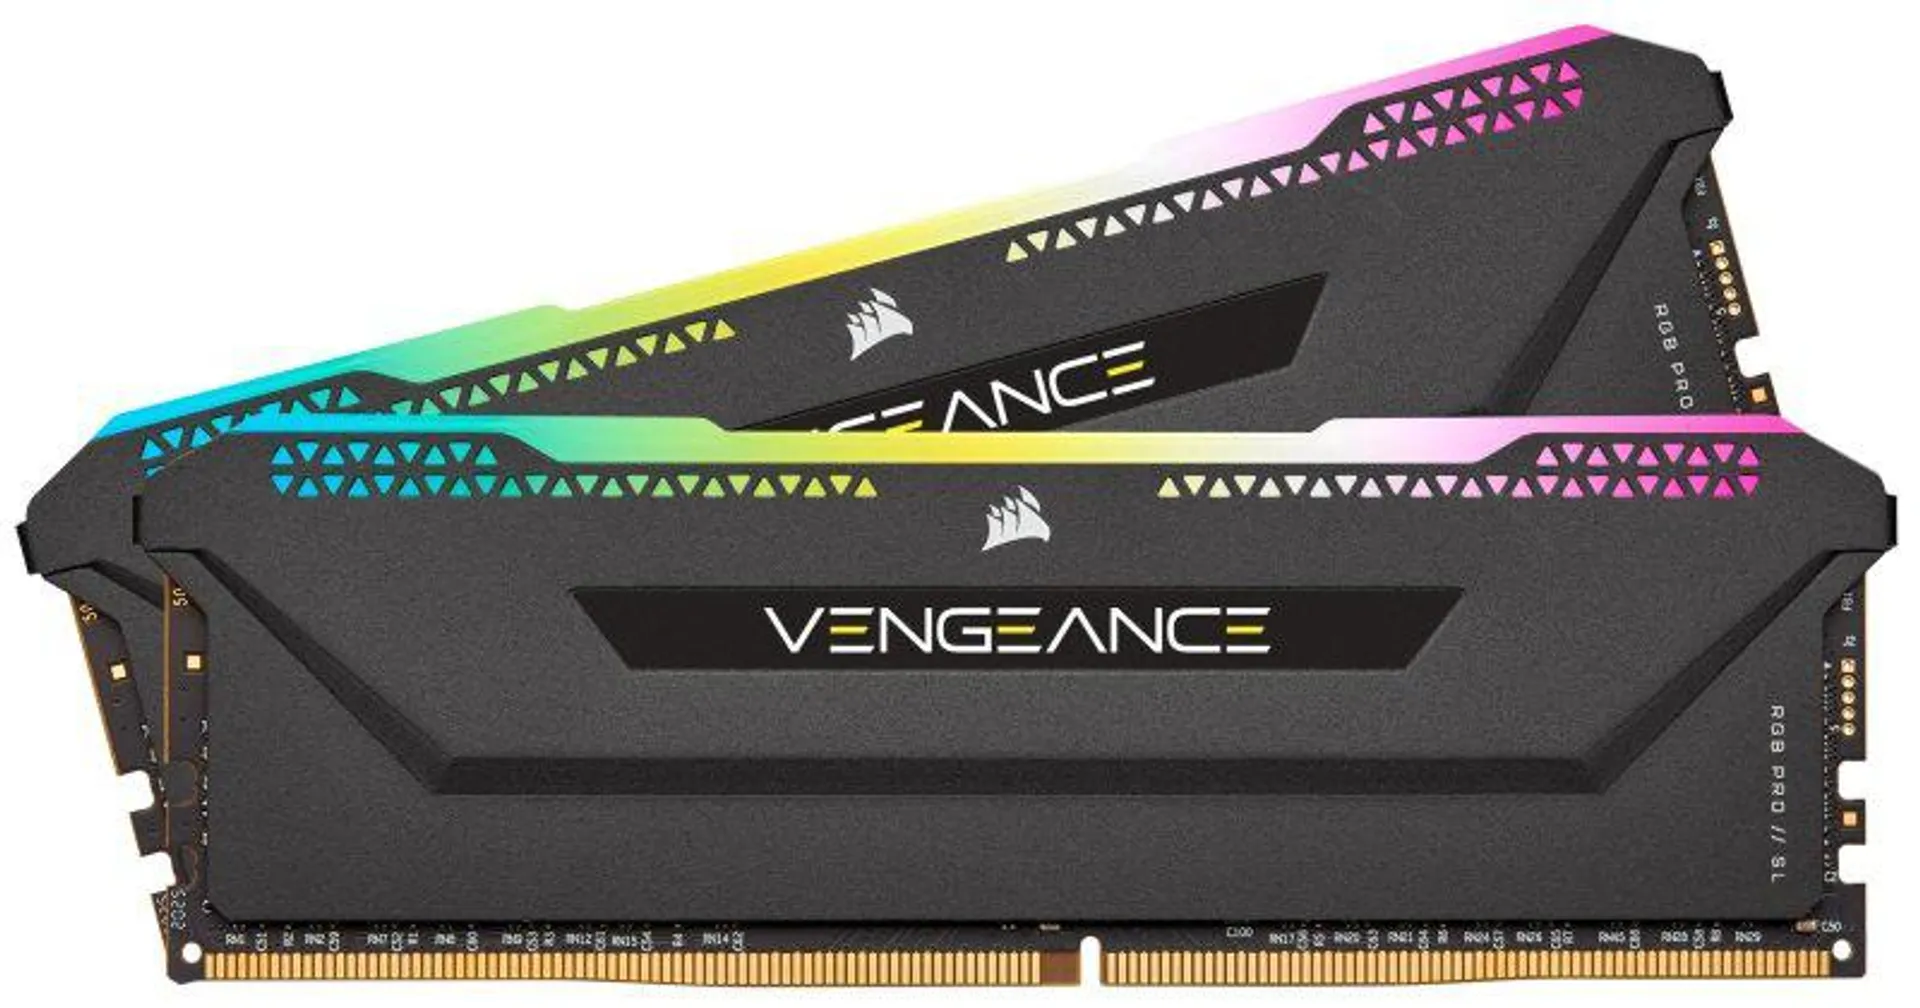 CORSAIR VENGEANCE RGB PRO SL 32GB DDR4 3600MHz Desktop Memory for Gaming